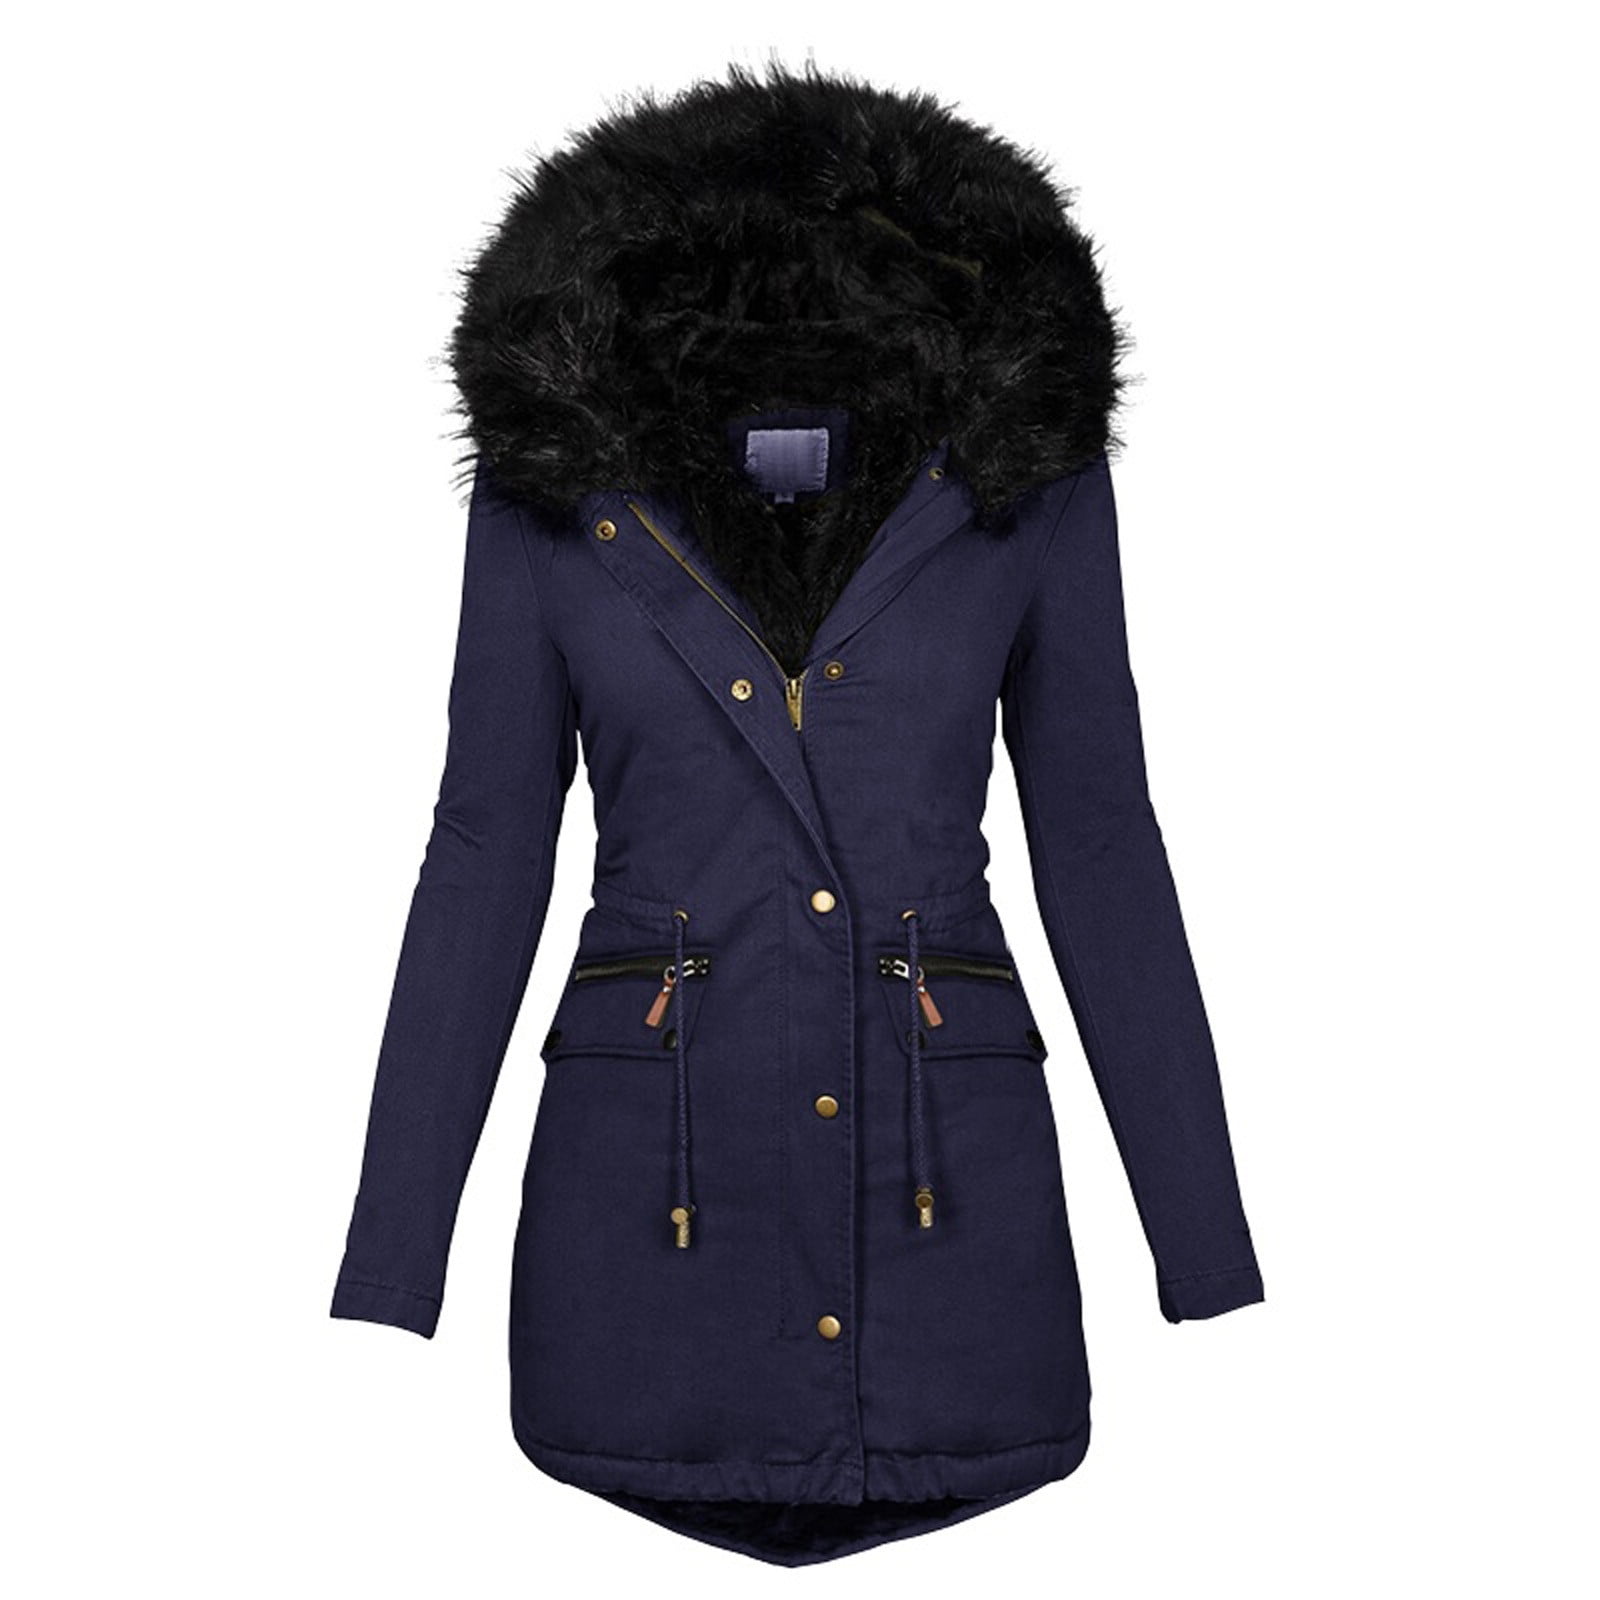 Women's Parka Winter Hooded Jacket Slim Faux Fur Collar Thicken Warm Cotton Coat